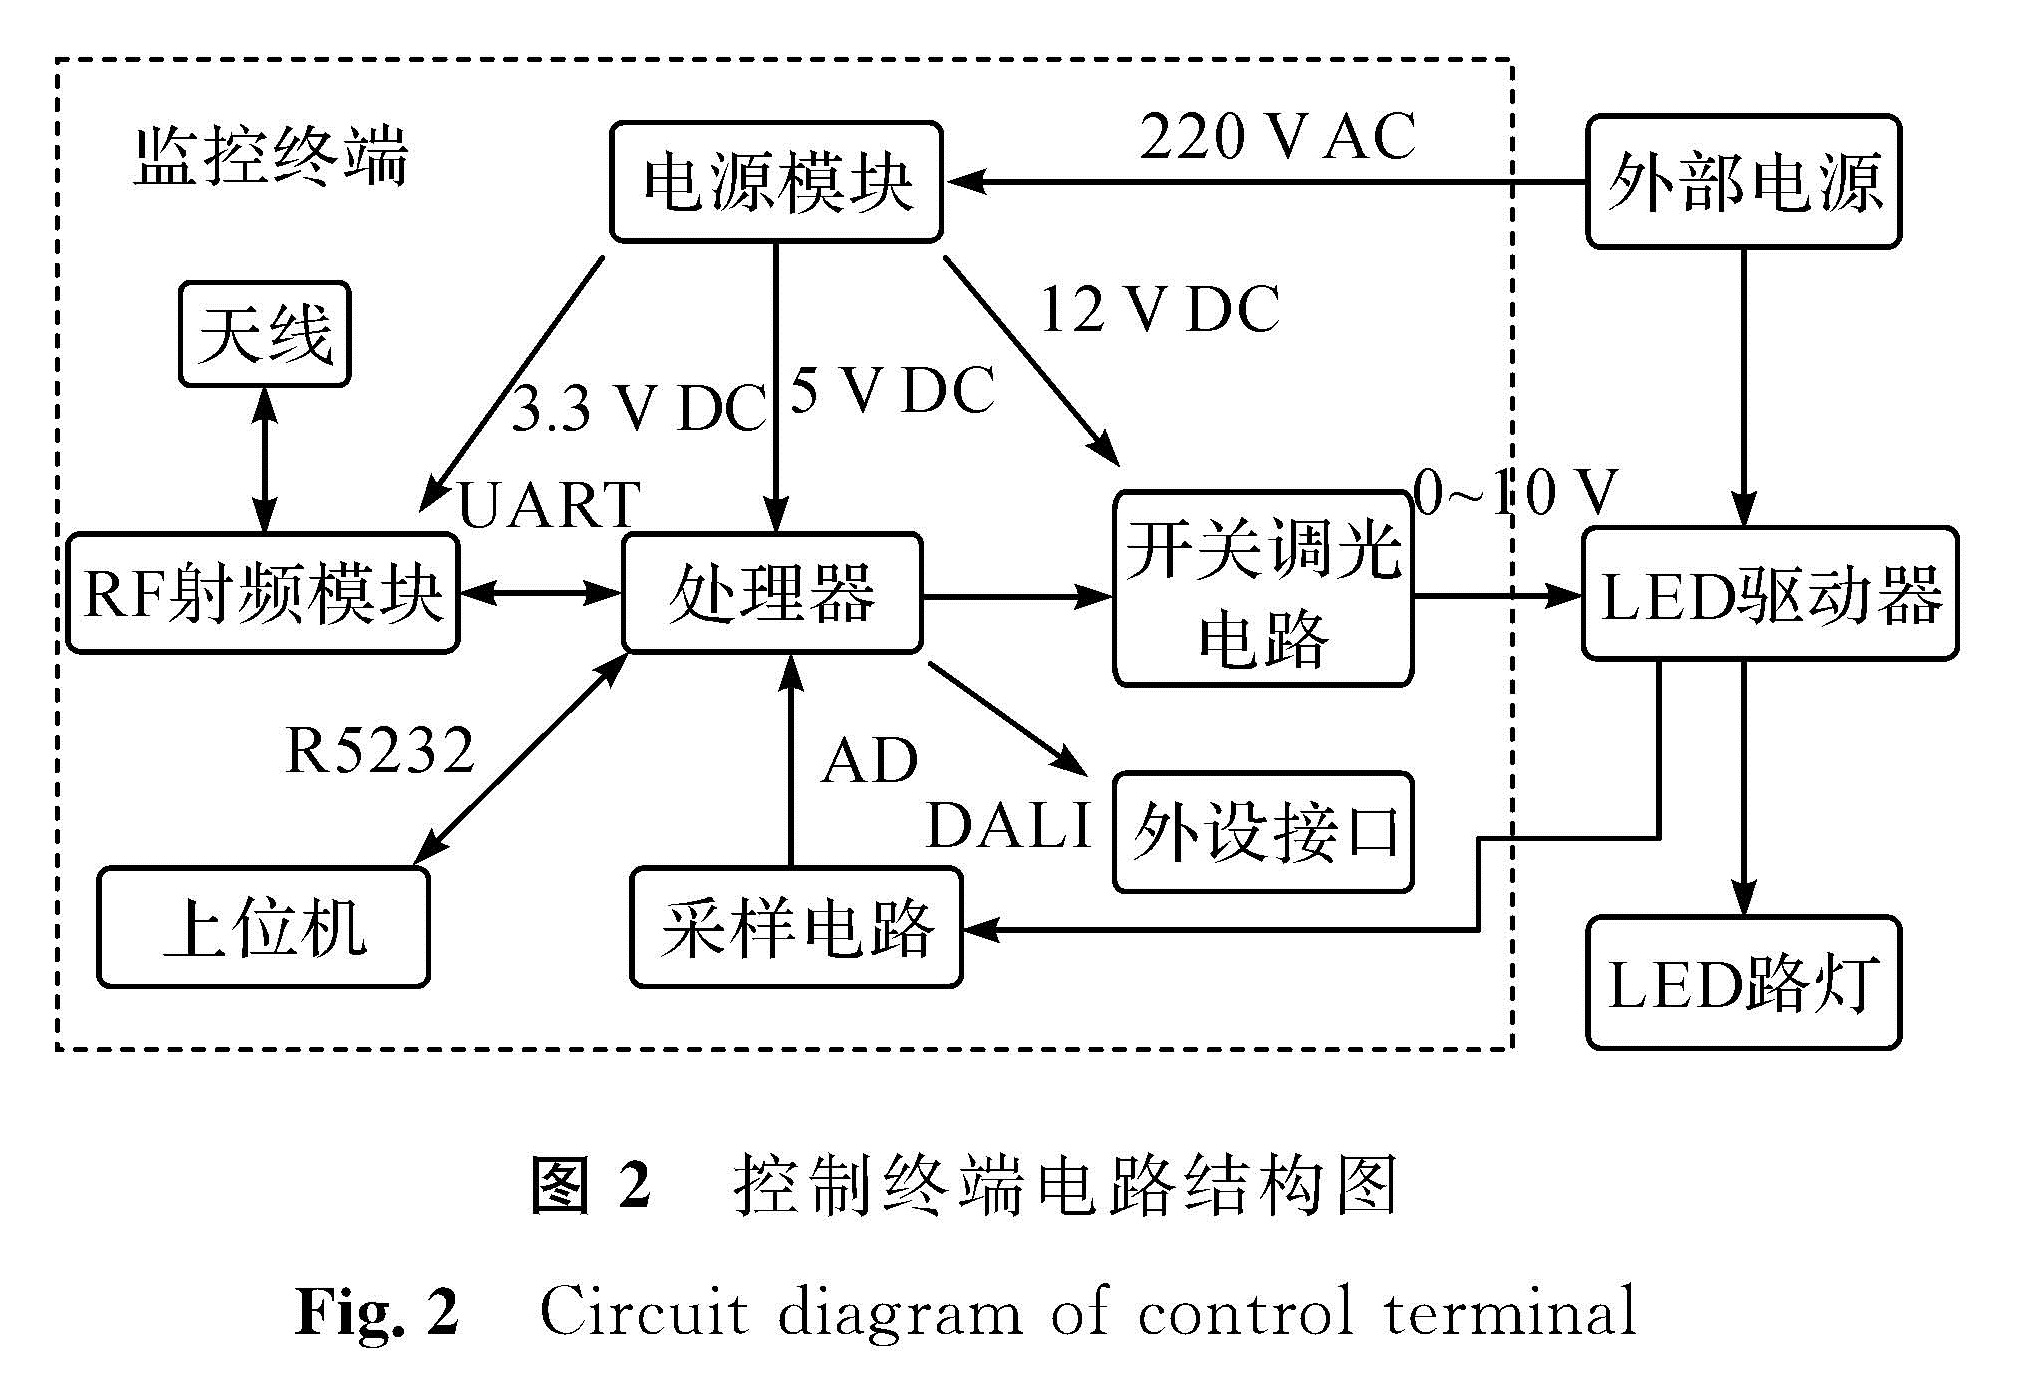 图2 控制终端电路结构图<br/>Fig.2 Circuit diagram of control terminal